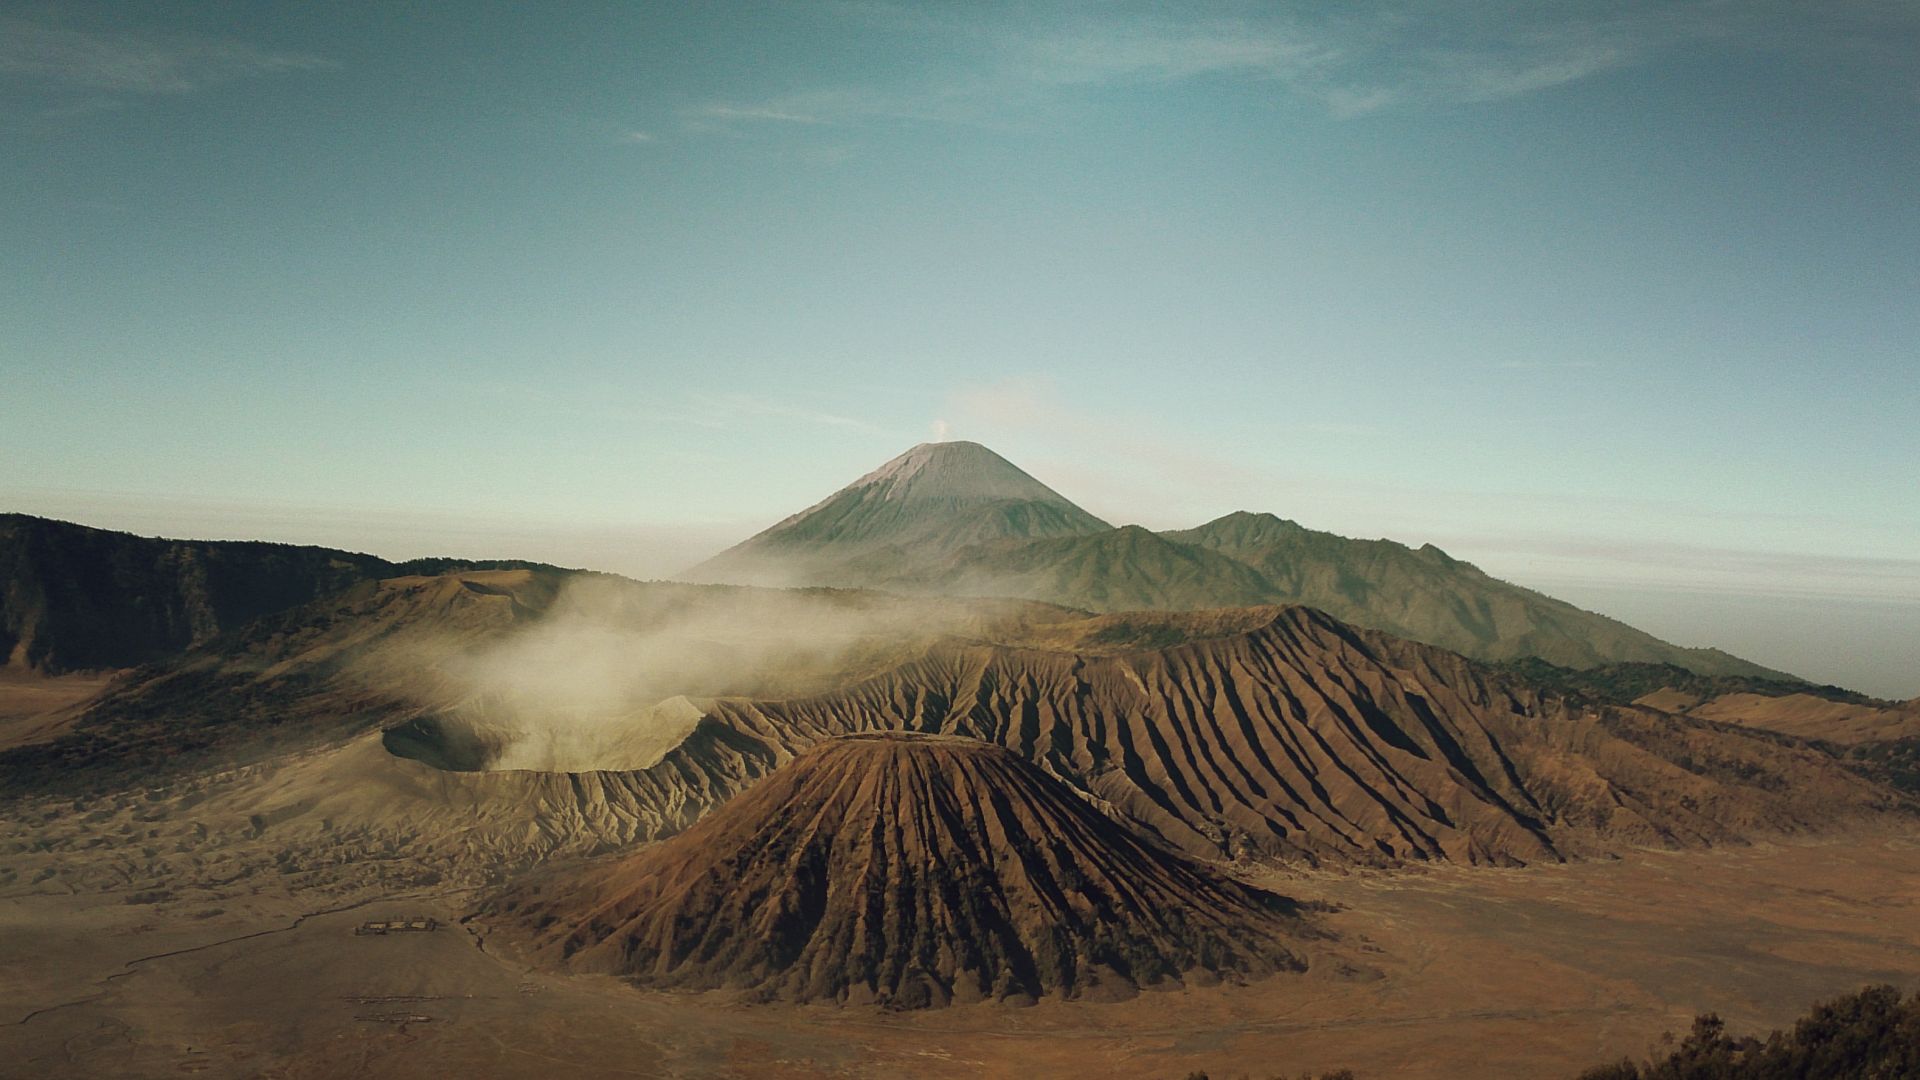 Бром, 4k, 5k, Индонезия, вулкан, песок, Bromo, 4k, 5k wallpaper, Indonesia, volcano, sand (horizontal)